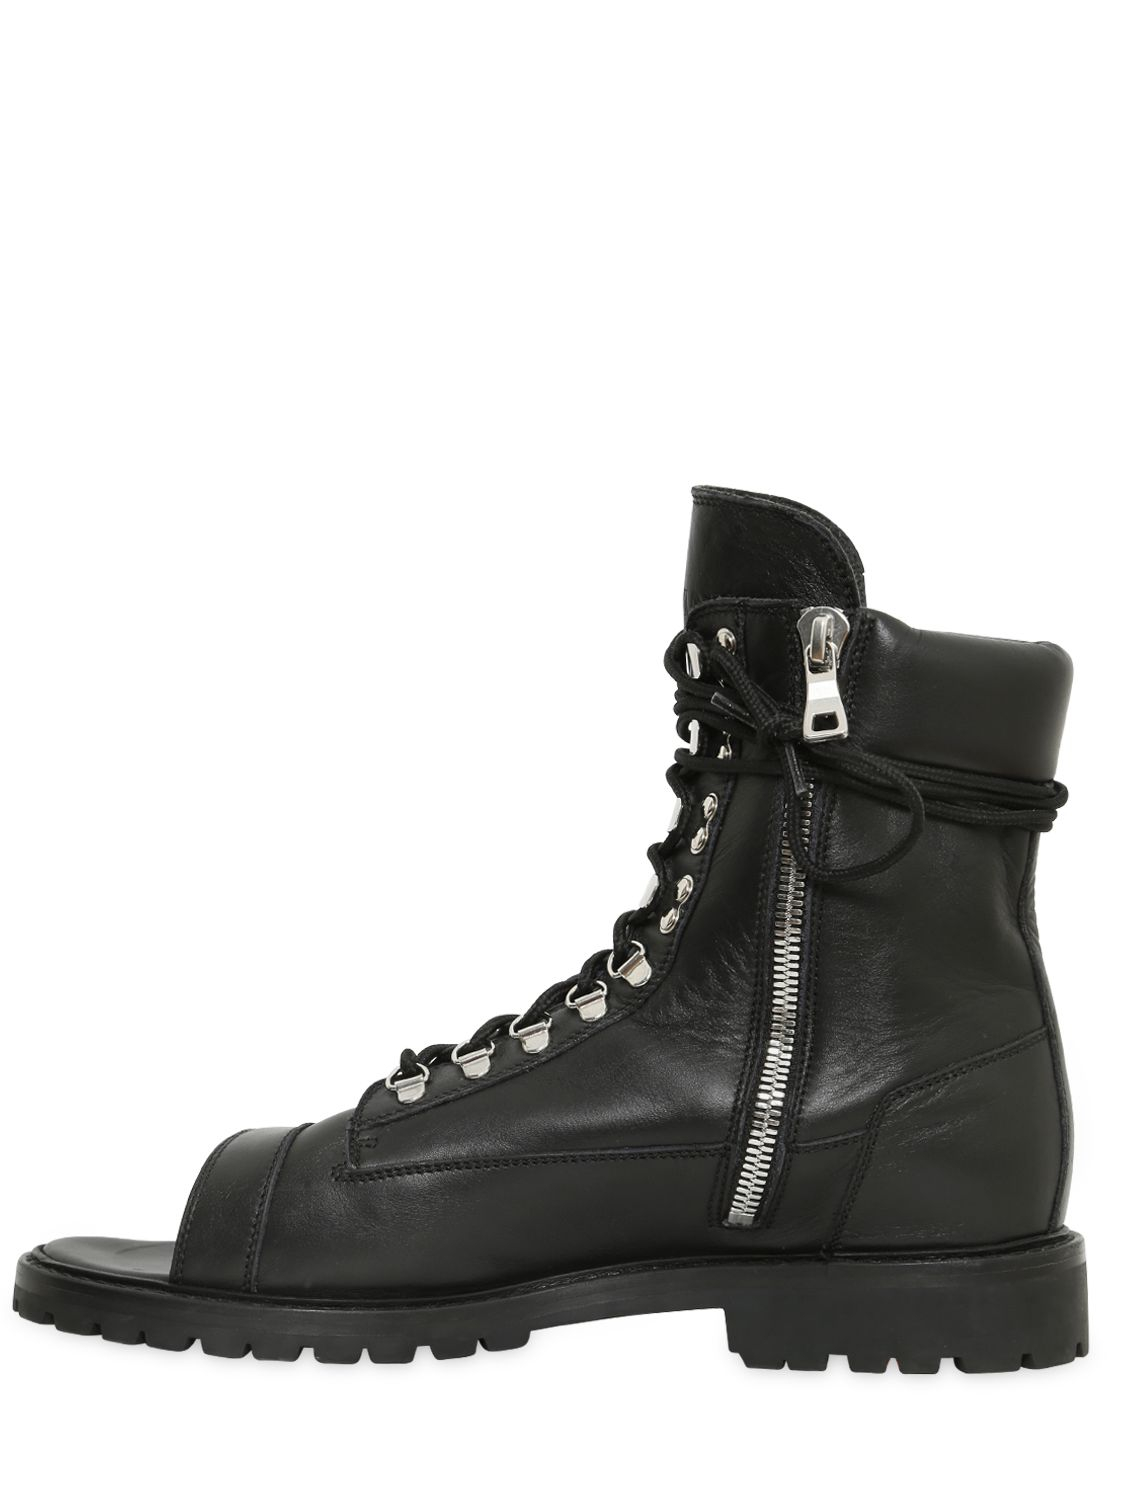 Balmain Open Toe Leather Combat Boots in Black | Lyst